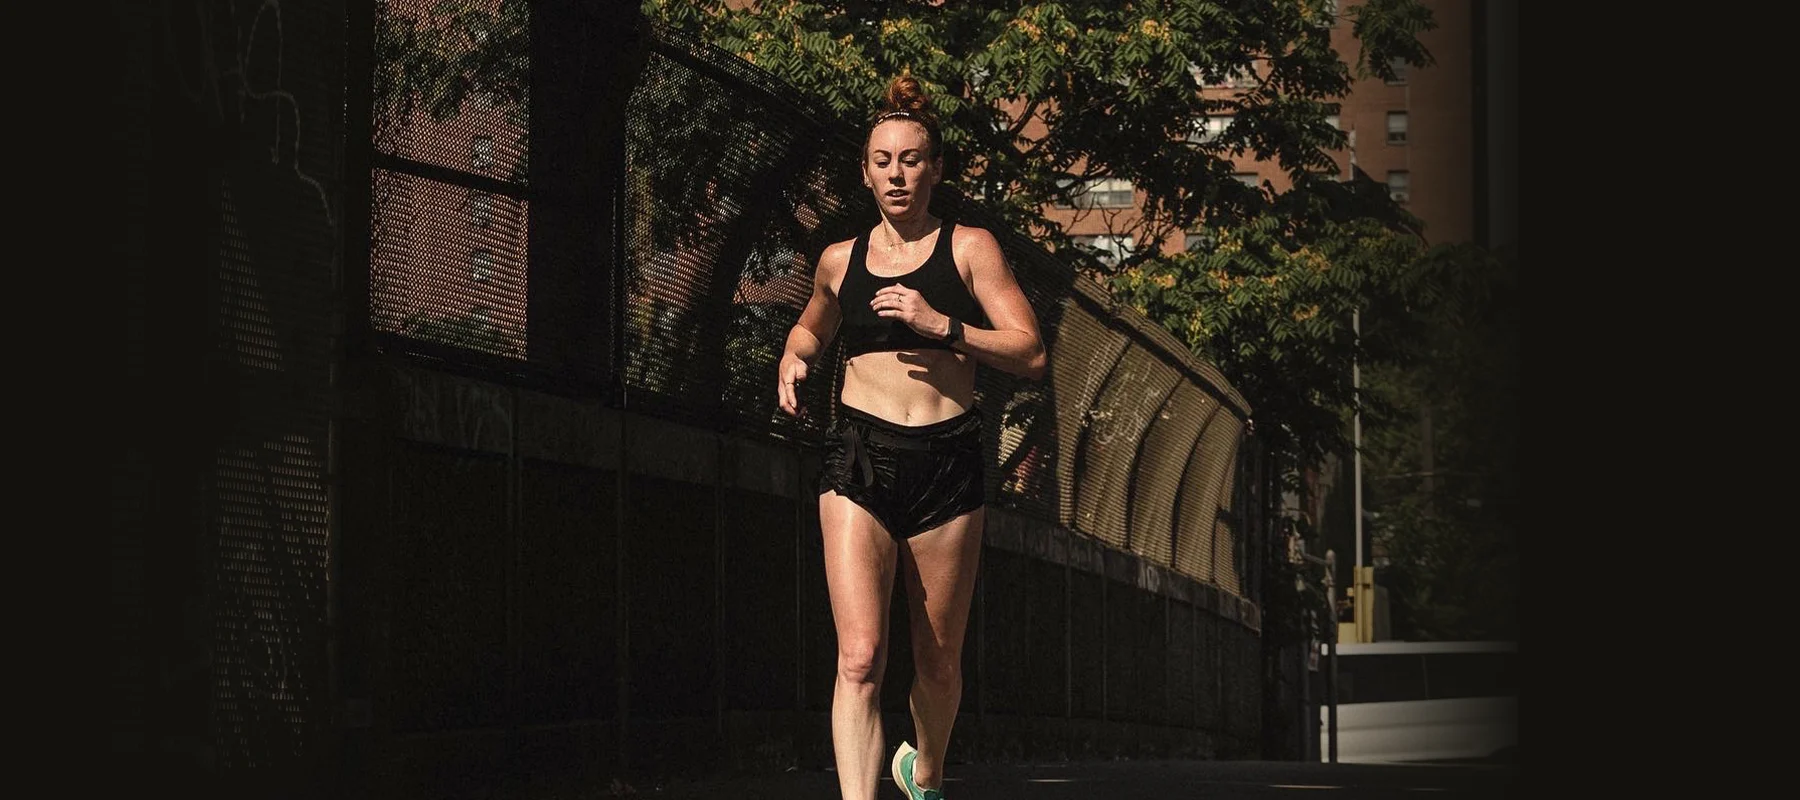 How Often Should You Run to Optimize Training?